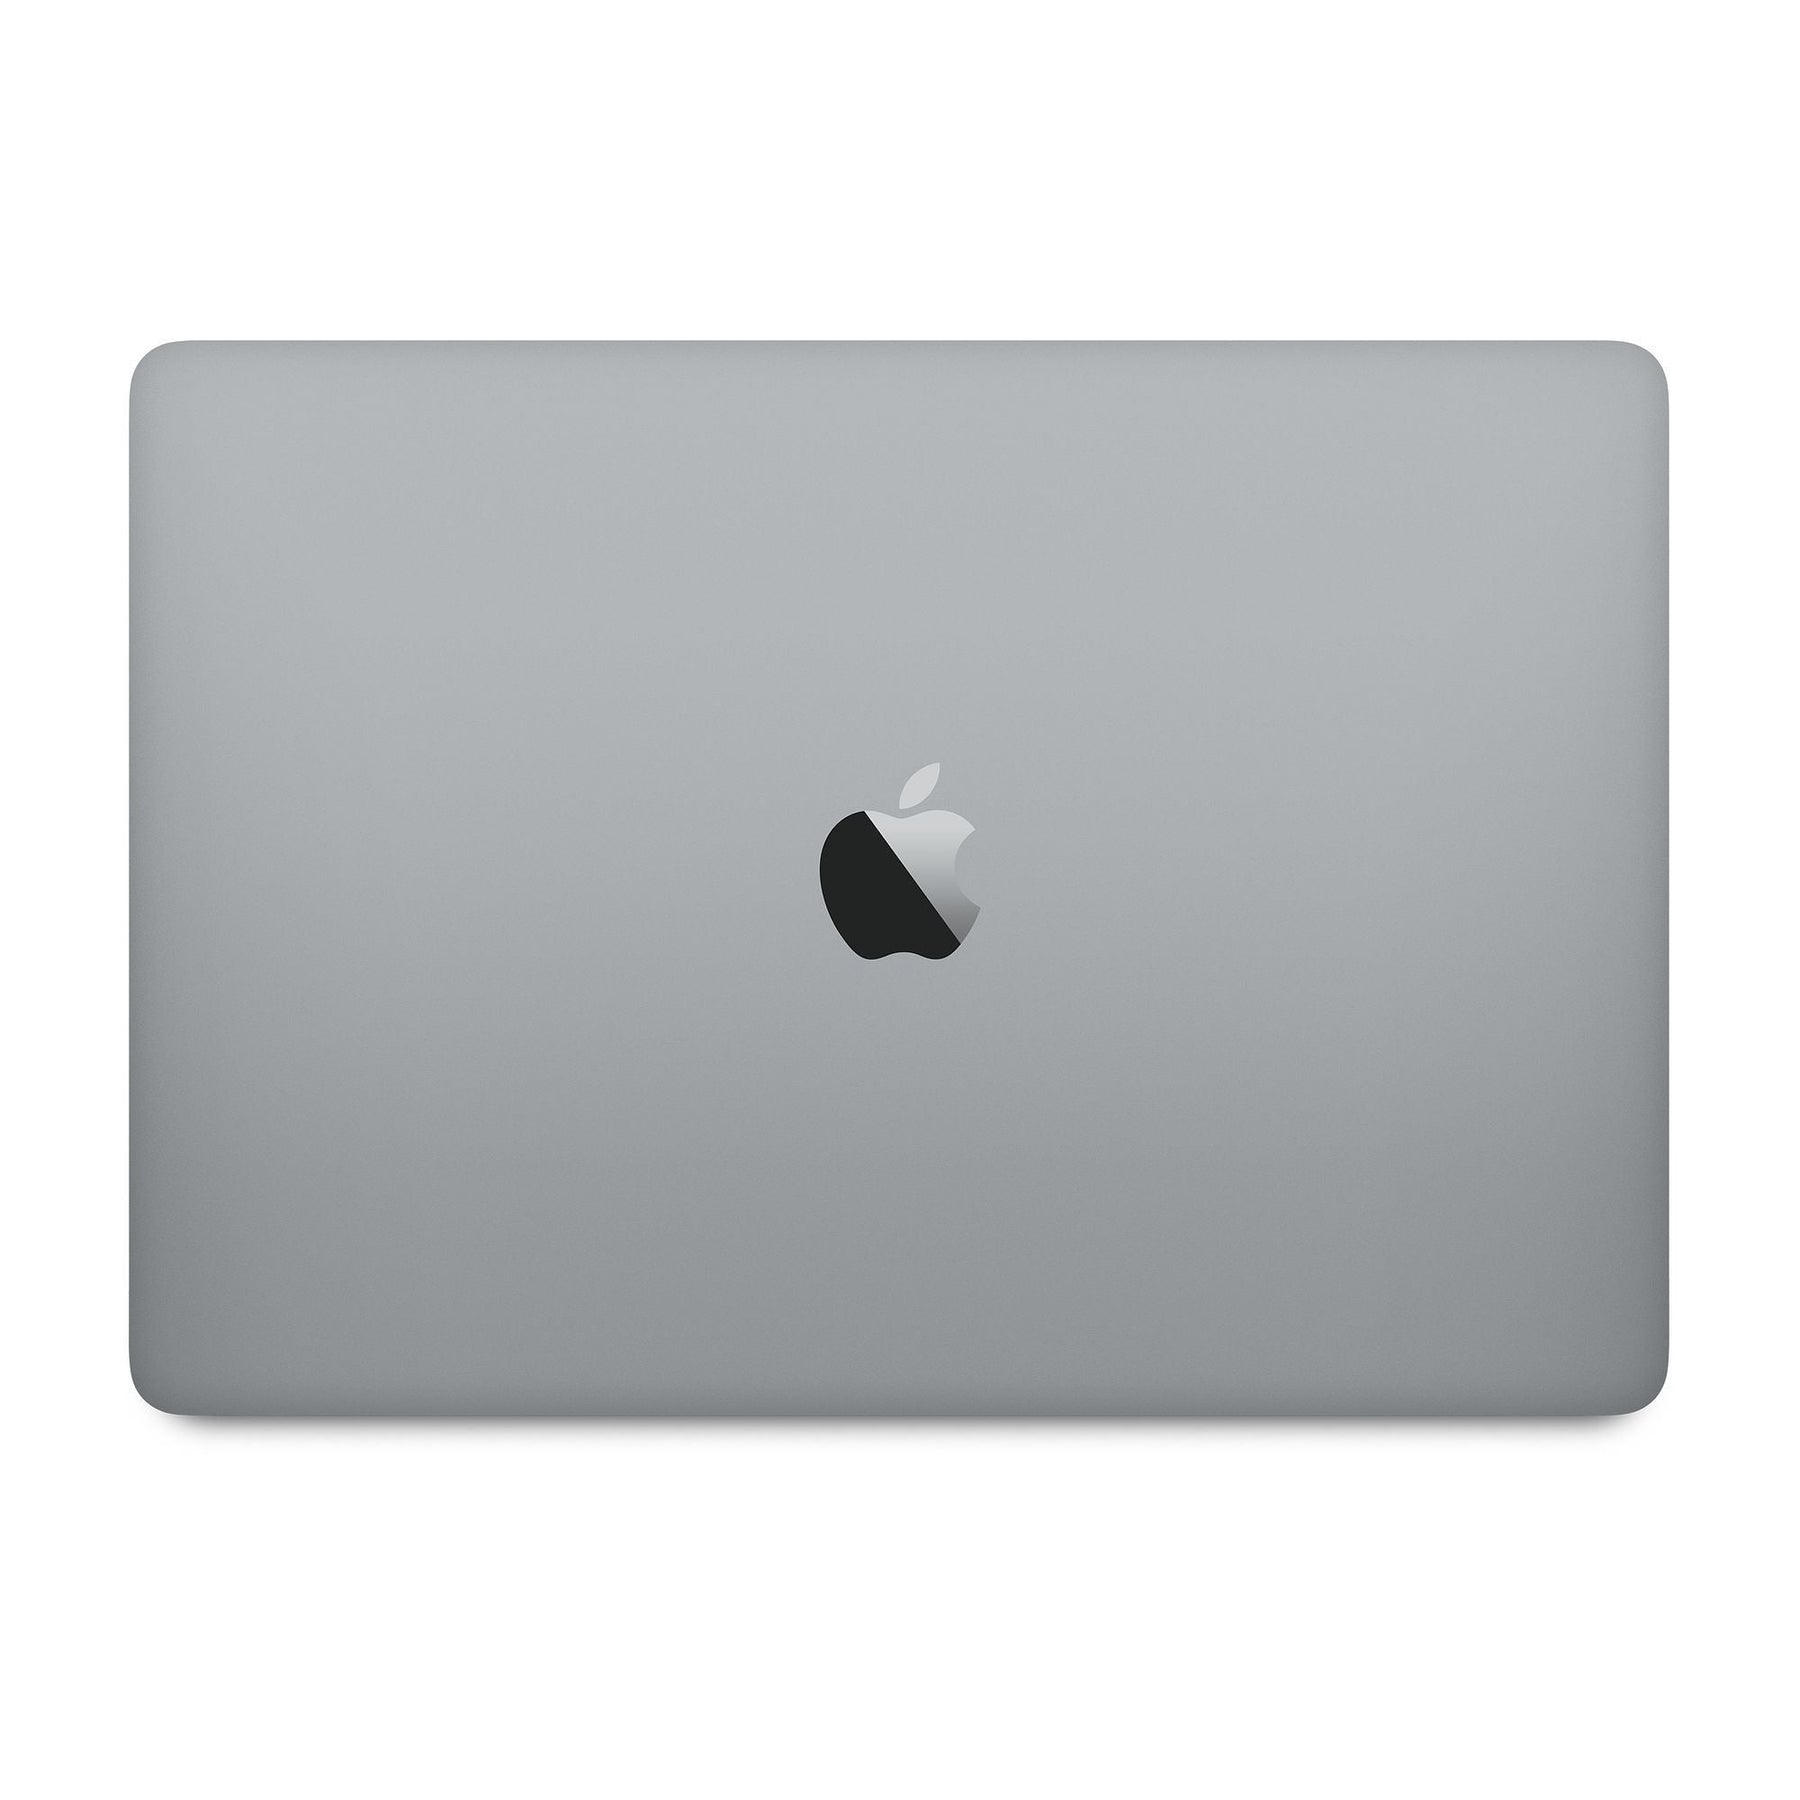 Macbook Pro 13-inch (Function Keys) - 2.35HZ Core i7 - Space Grey - (2017)